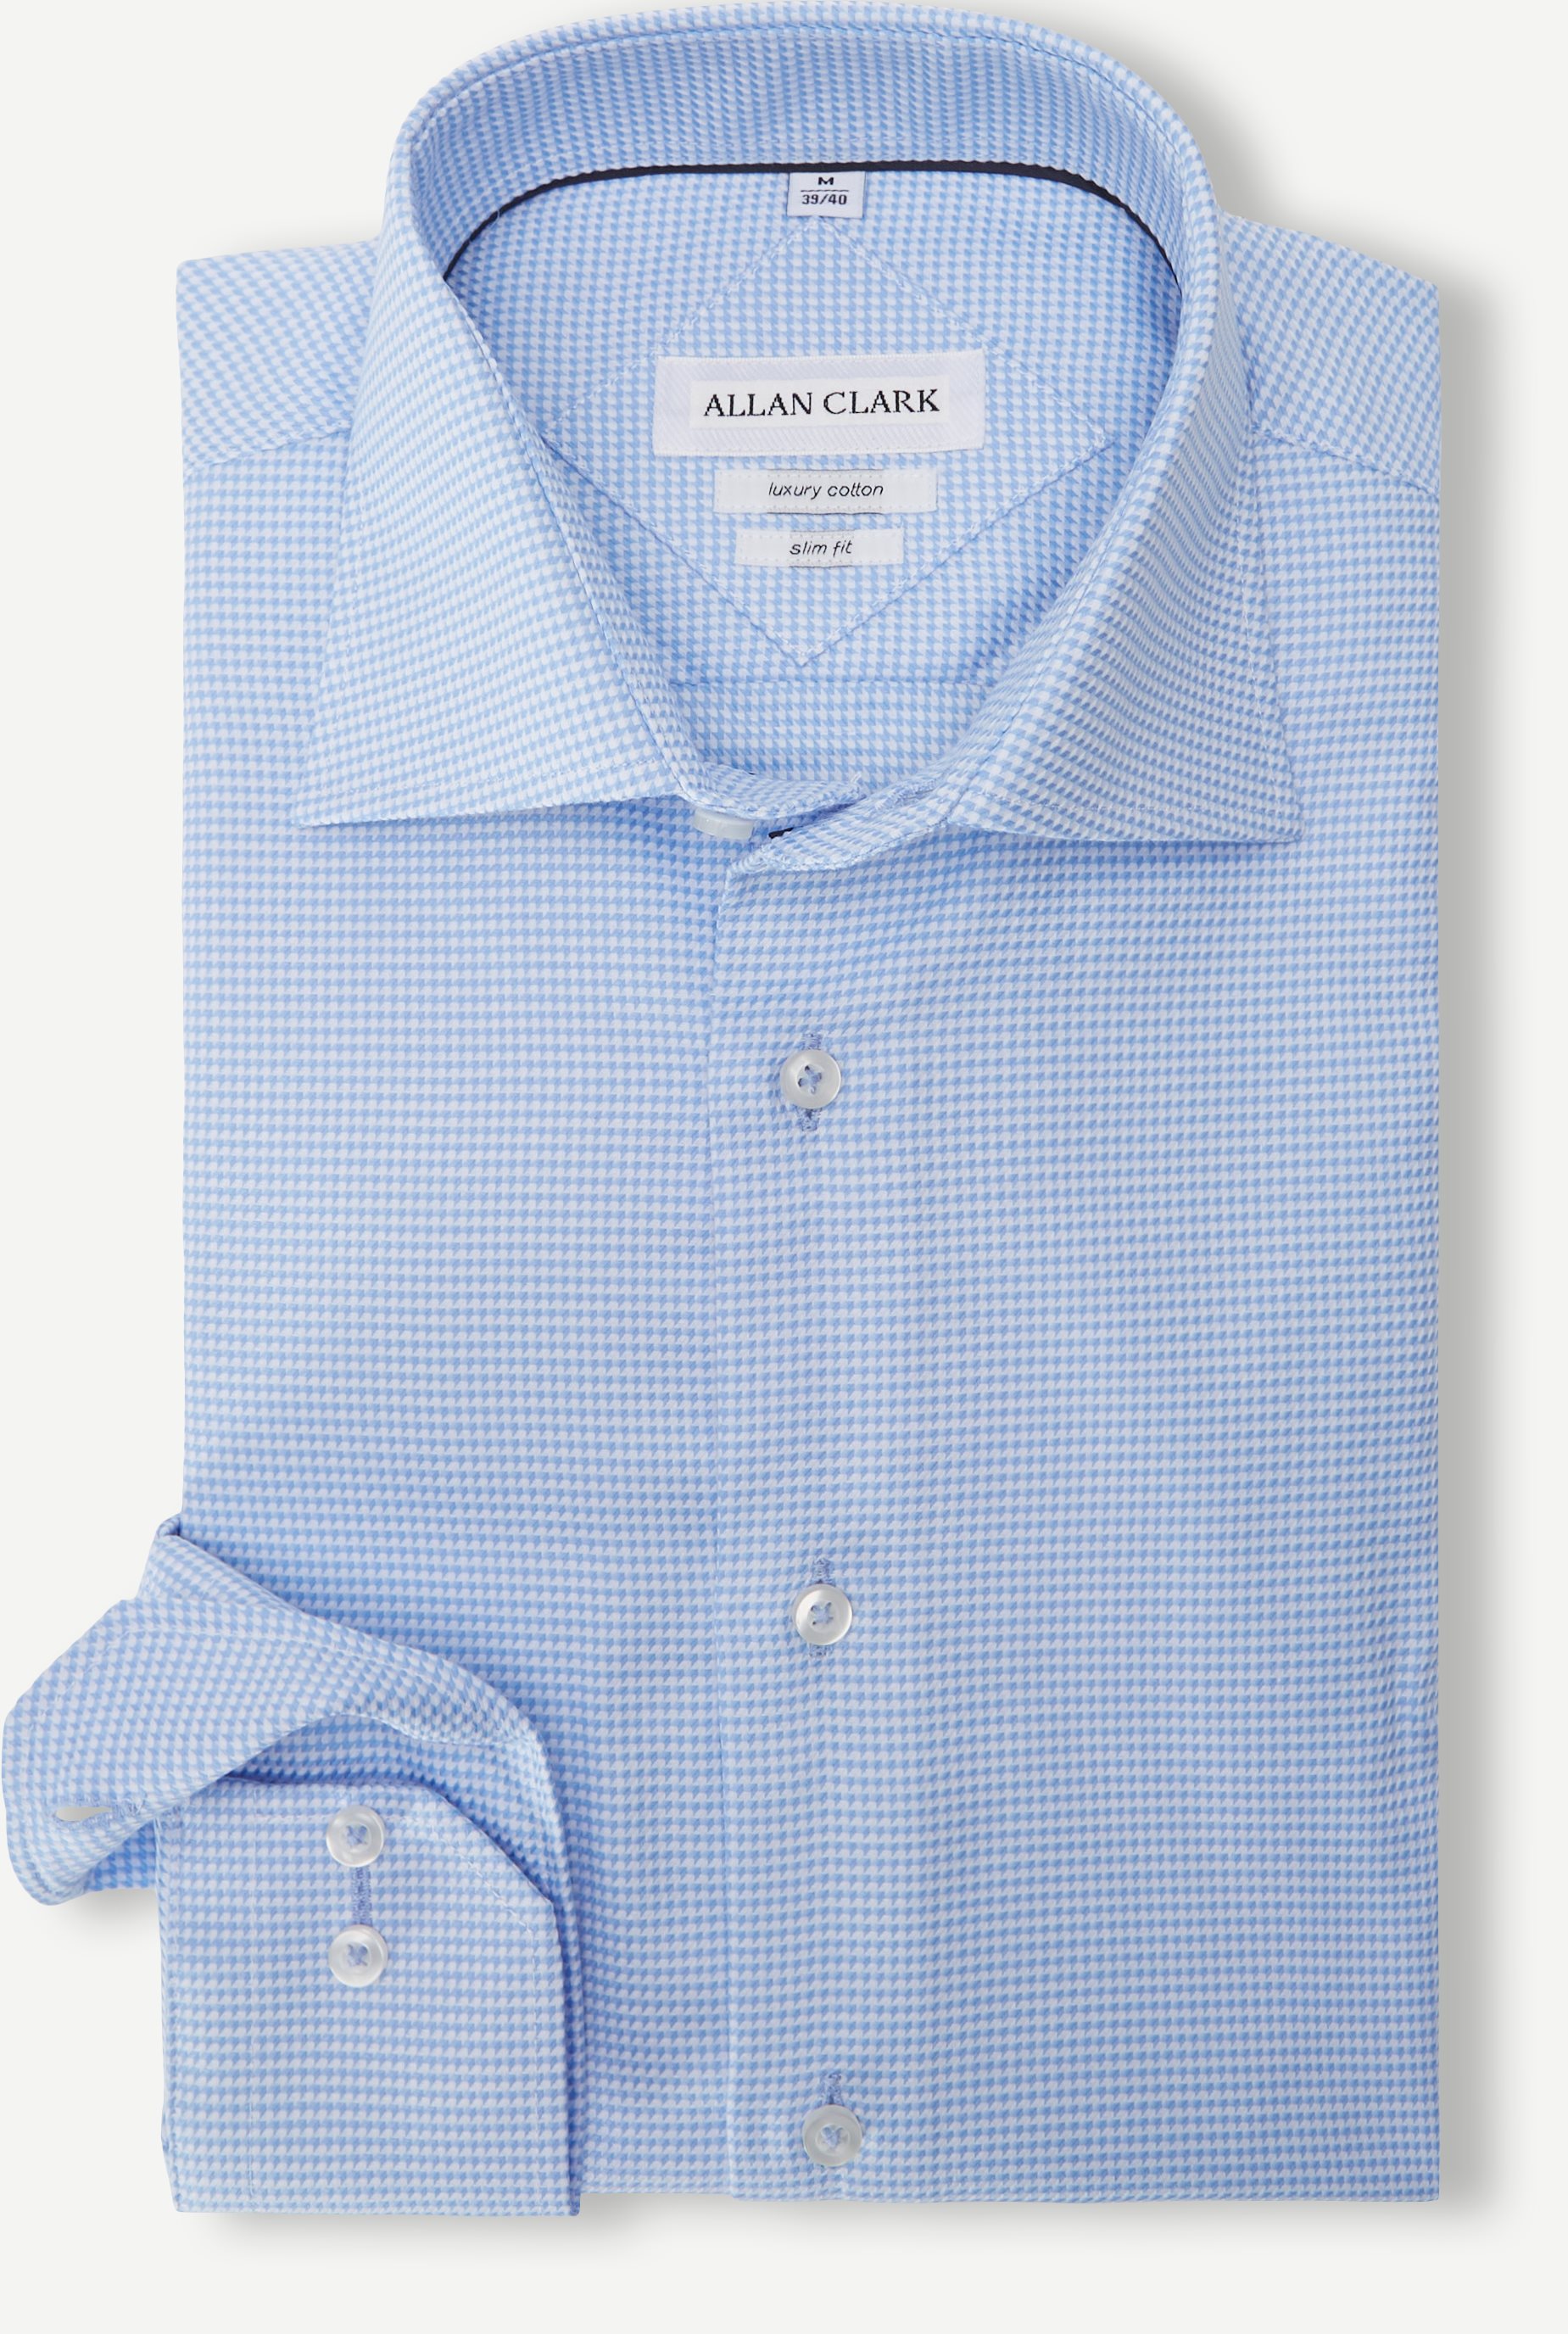 Allan Clark Shirts ELIAS Blue